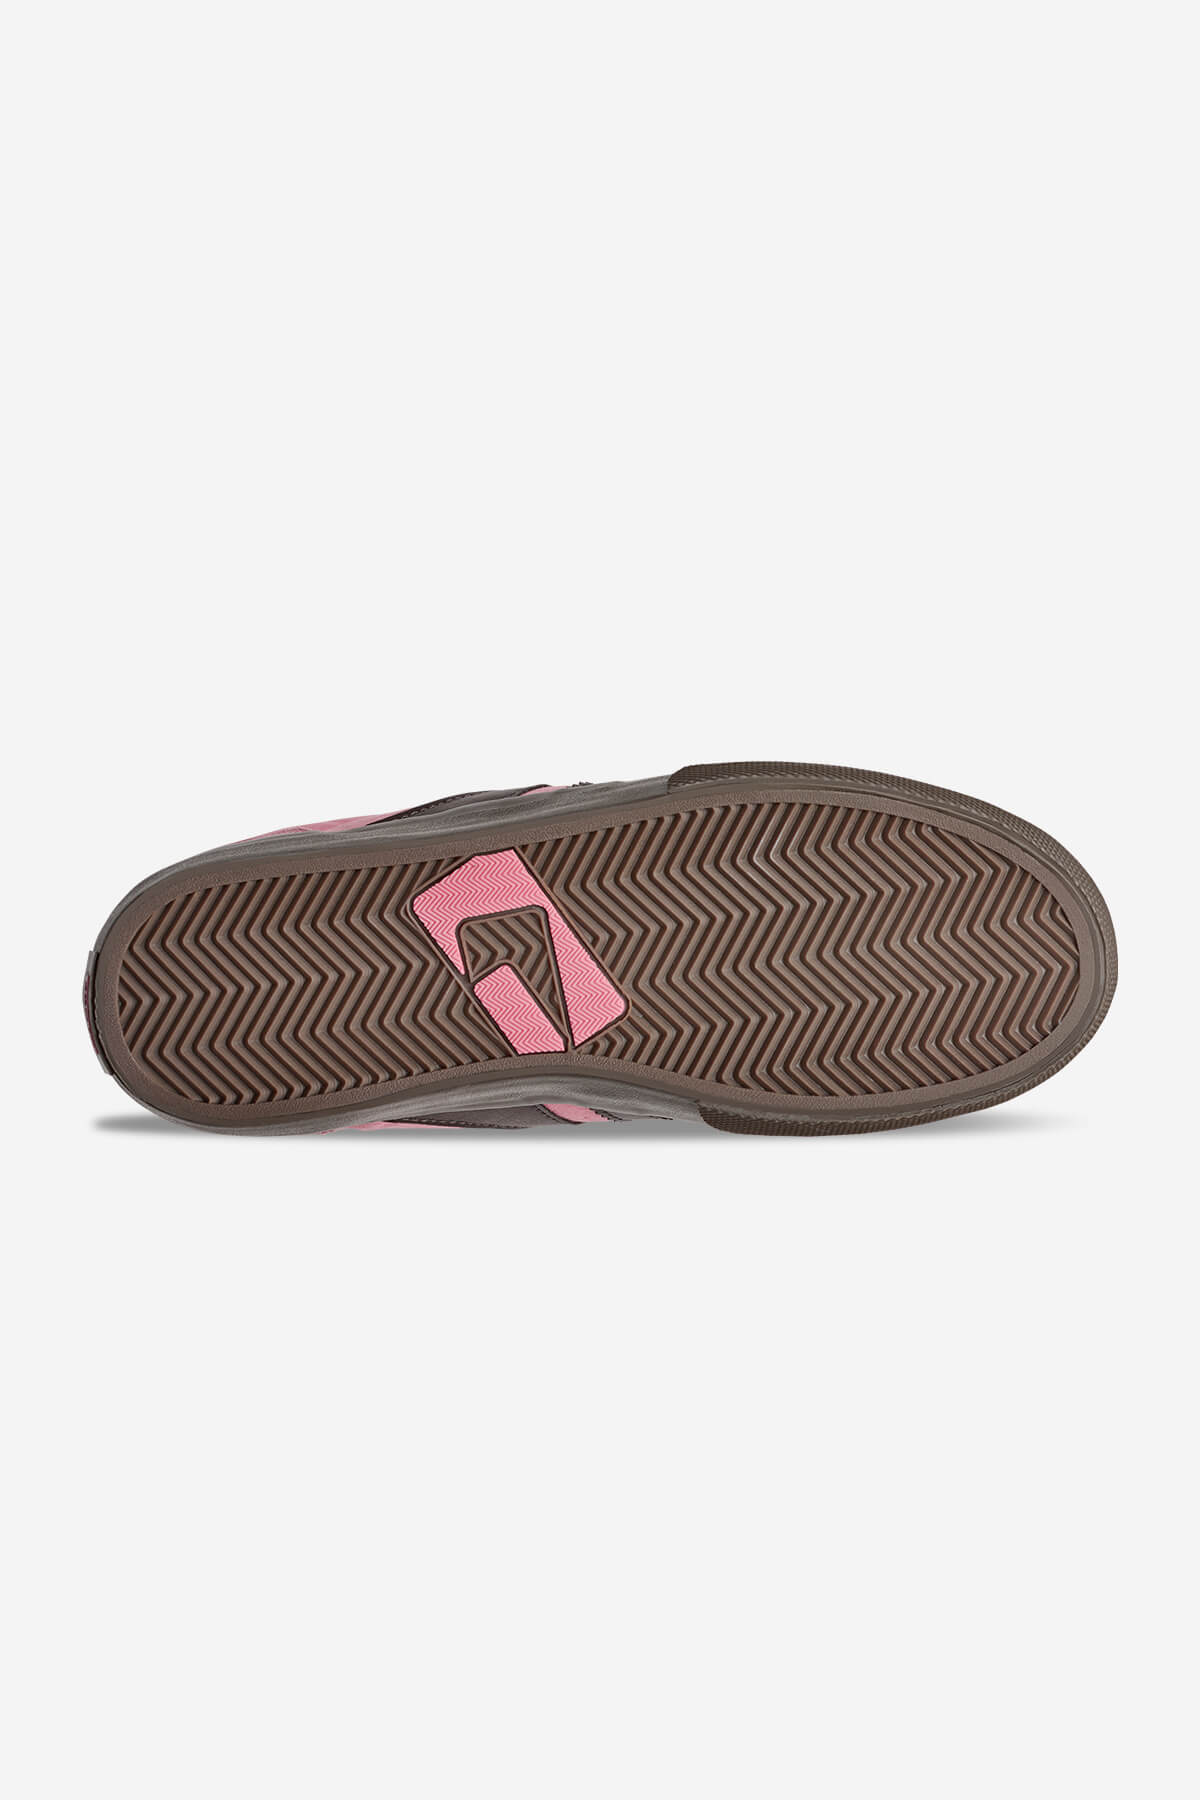 encore-2 pink dark gum skate shoes